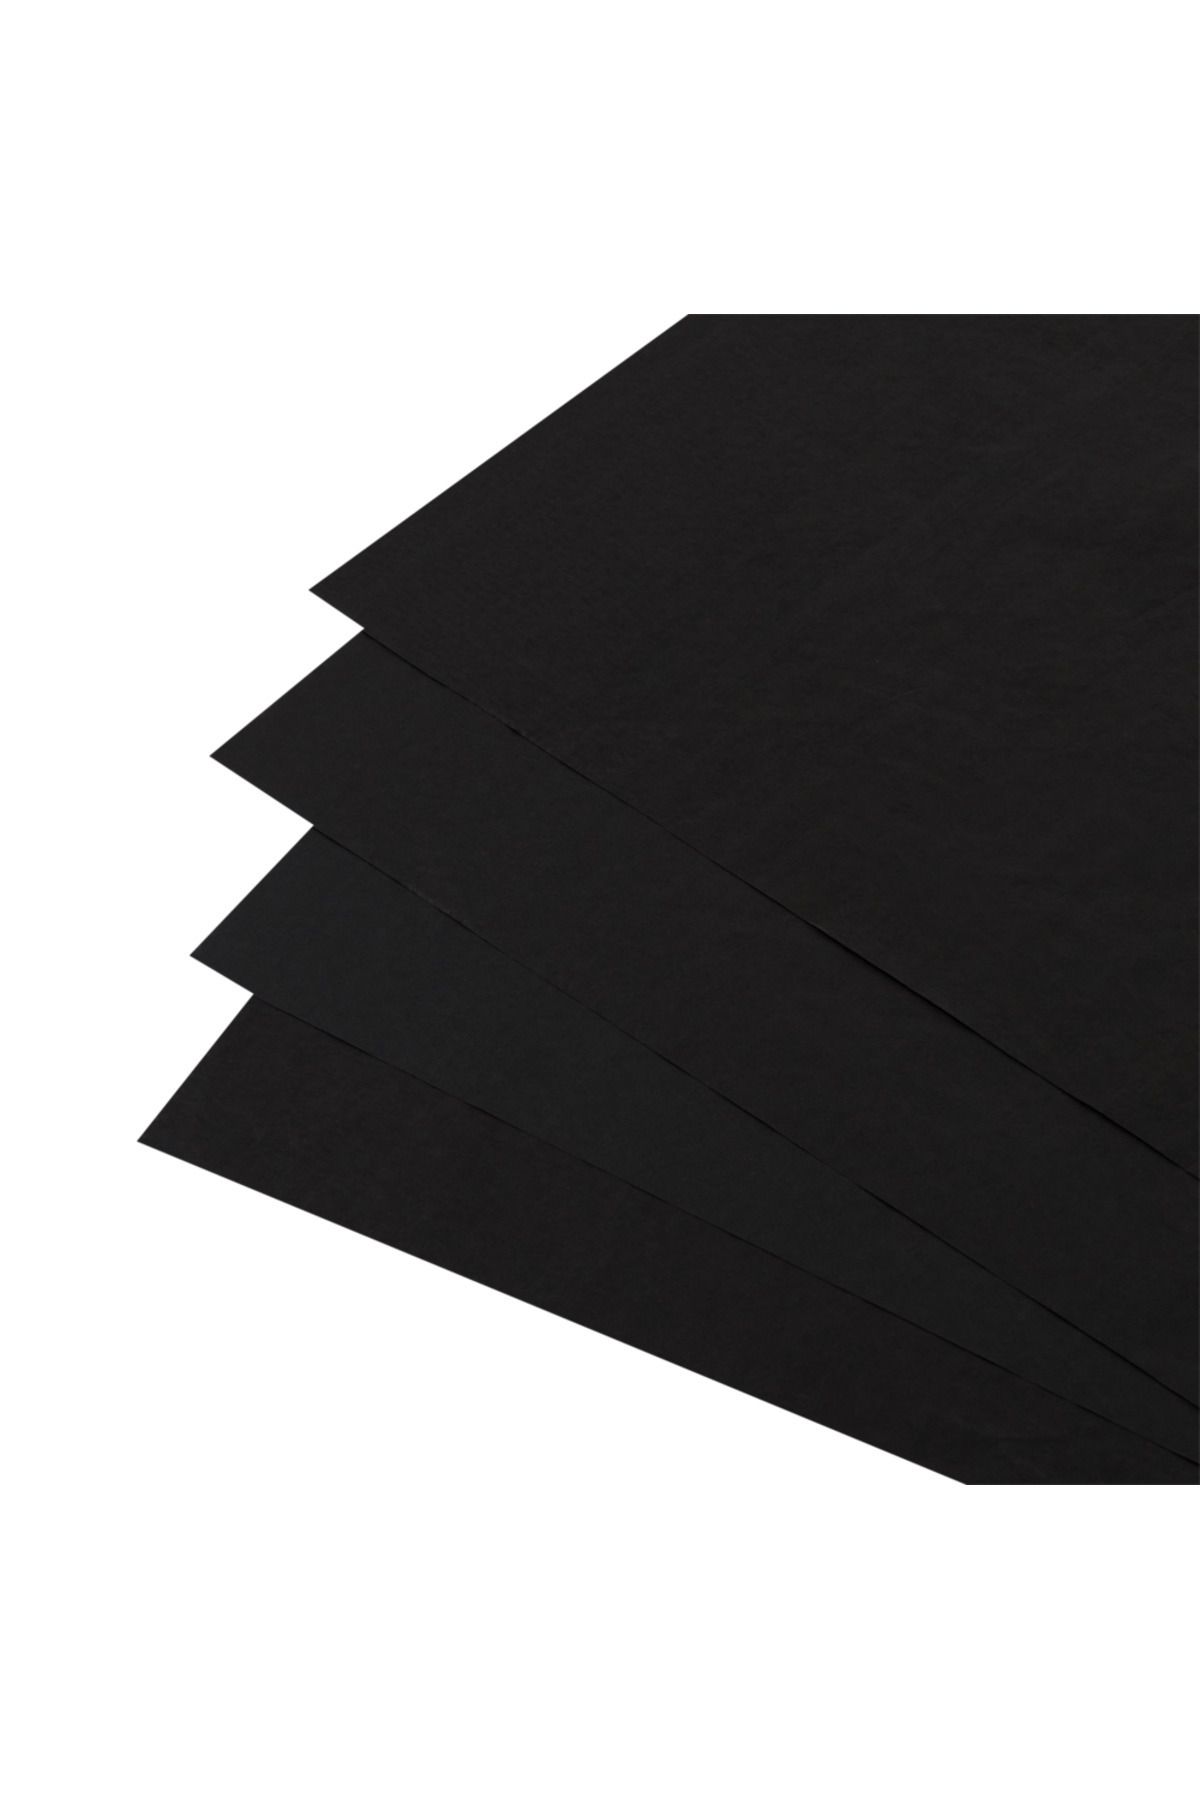 Packanya 50x70-100 Adet 17 Gr. Siyah Pelur Kağıdı